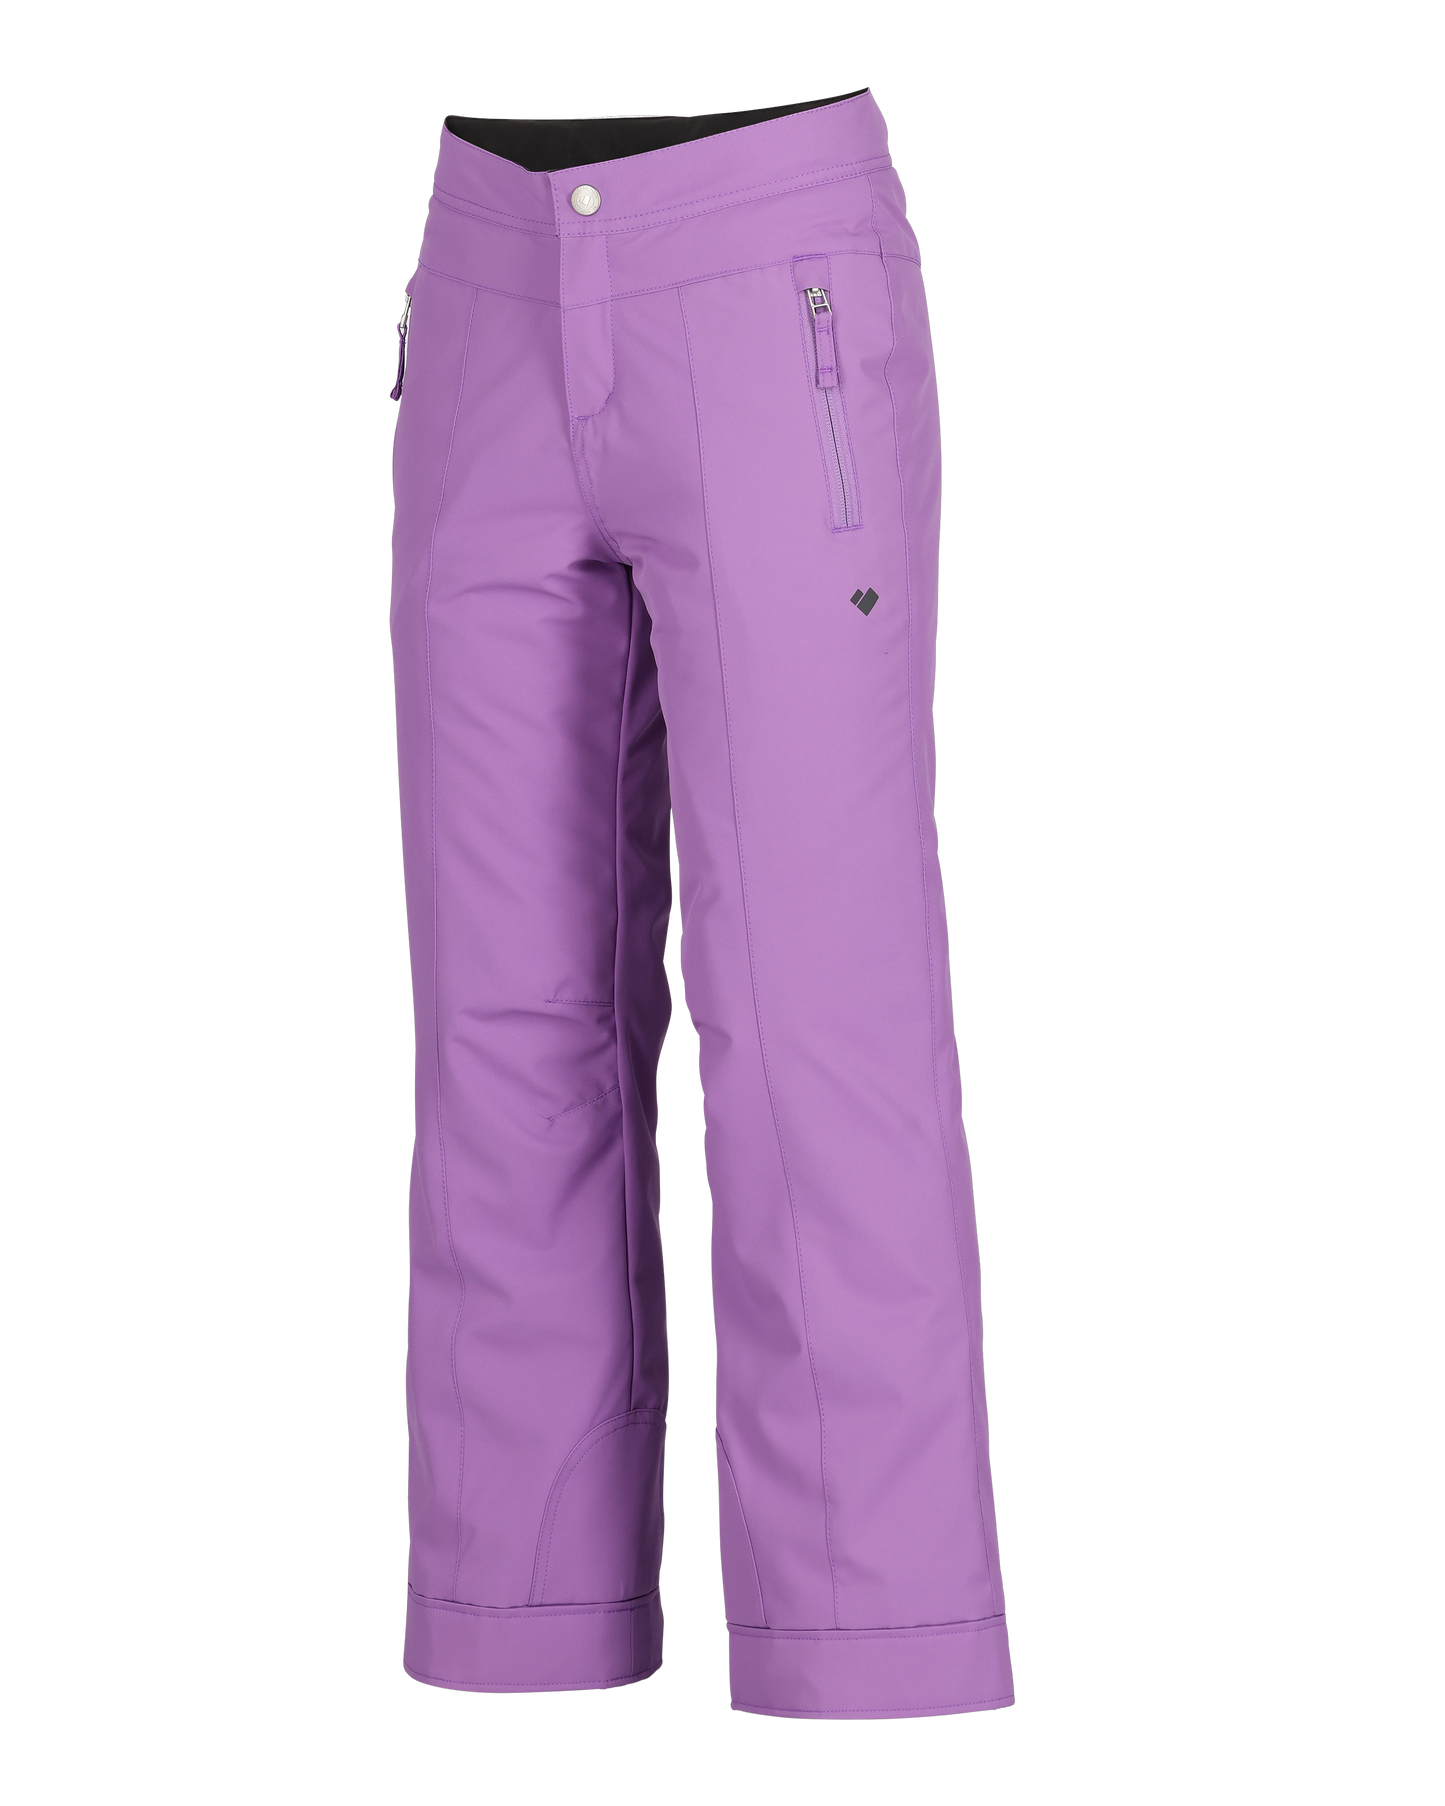 Women's Ski Pants: Shredy by Obermeyer